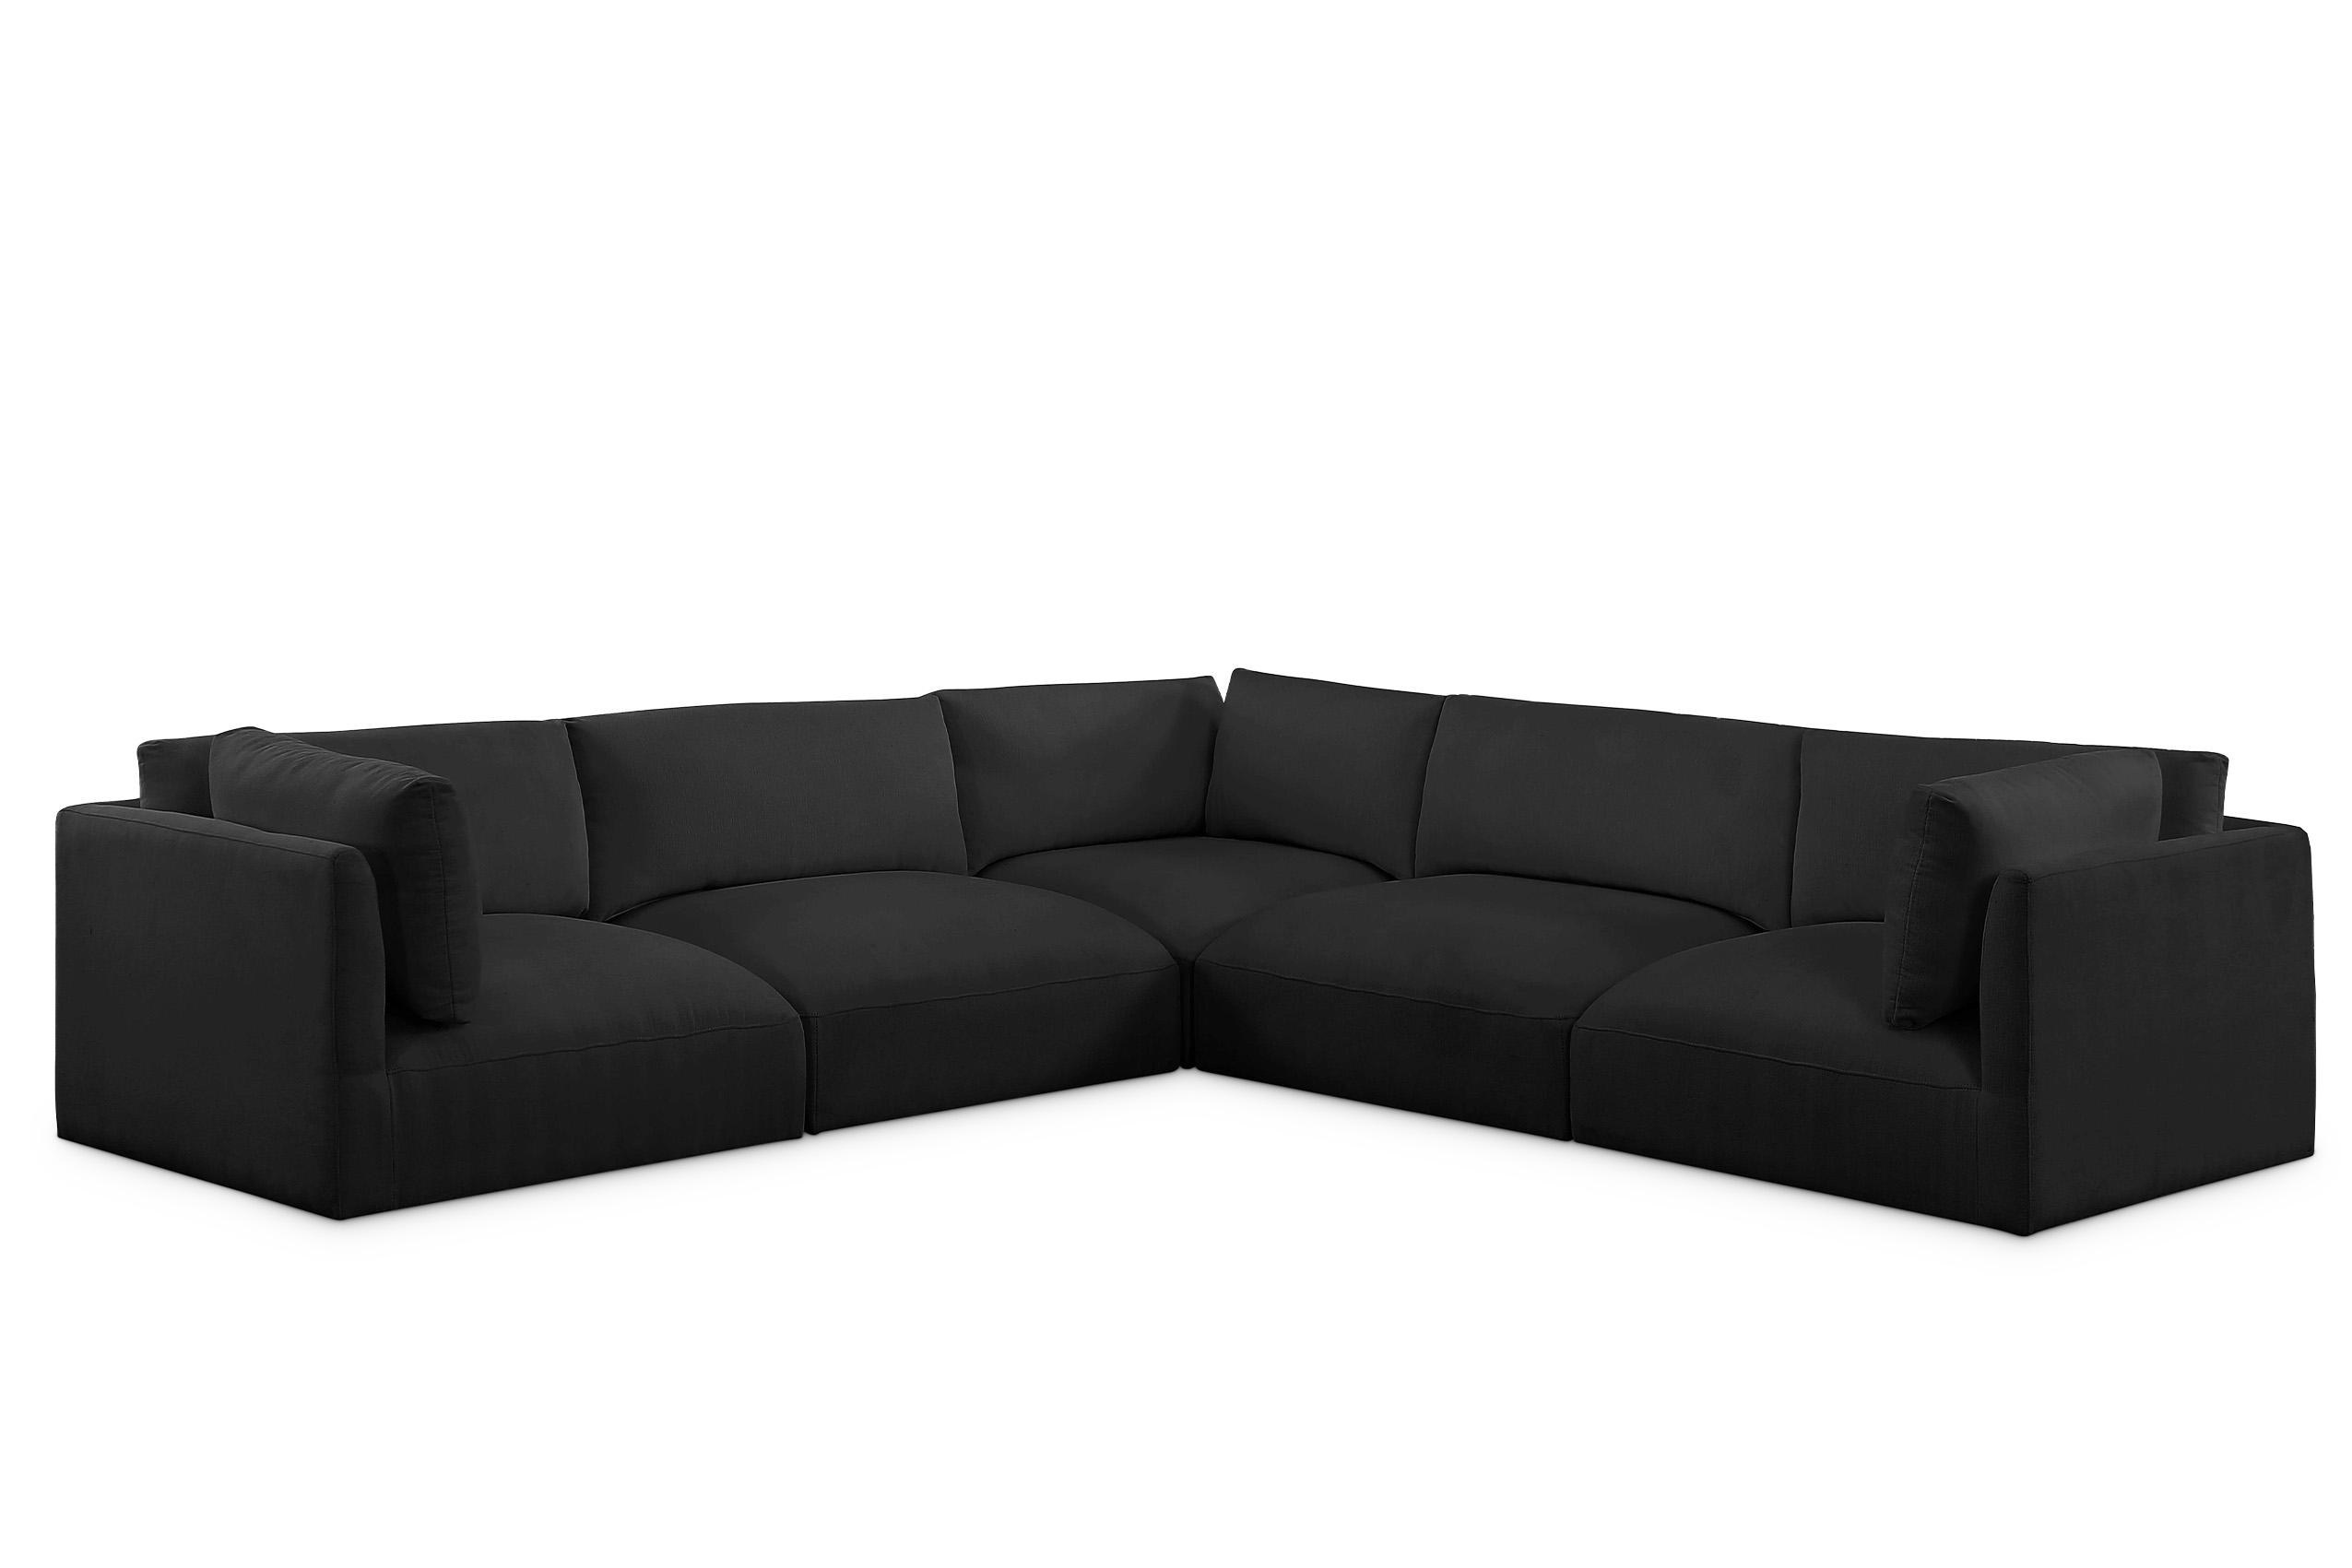 Contemporary, Modern Modular Sectional Sofa EASE 696Black-Sec5D 696Black-Sec5D in Black Fabric